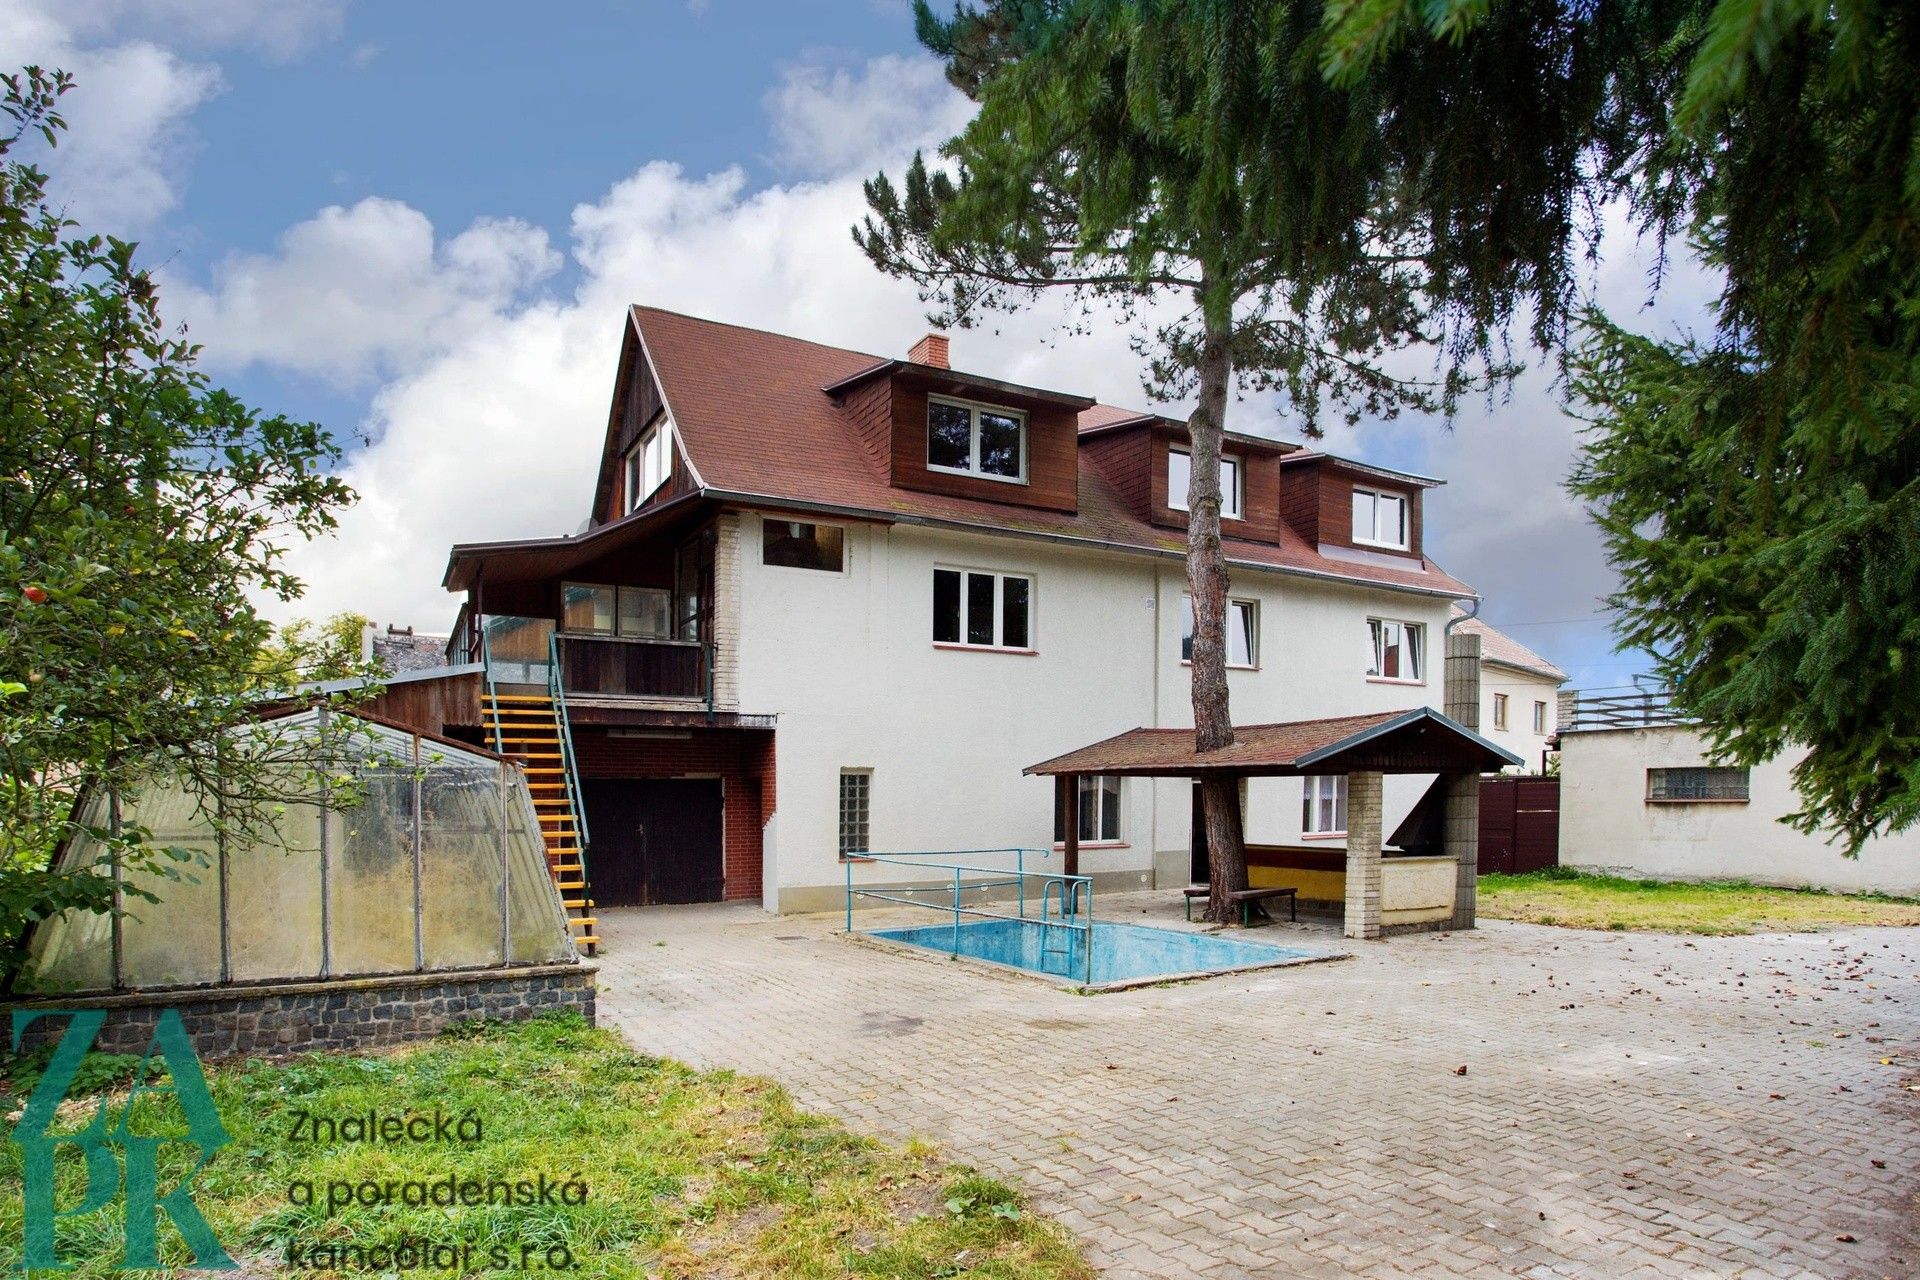 Rodinné domy, Choratice, Malšovice, 342 m²